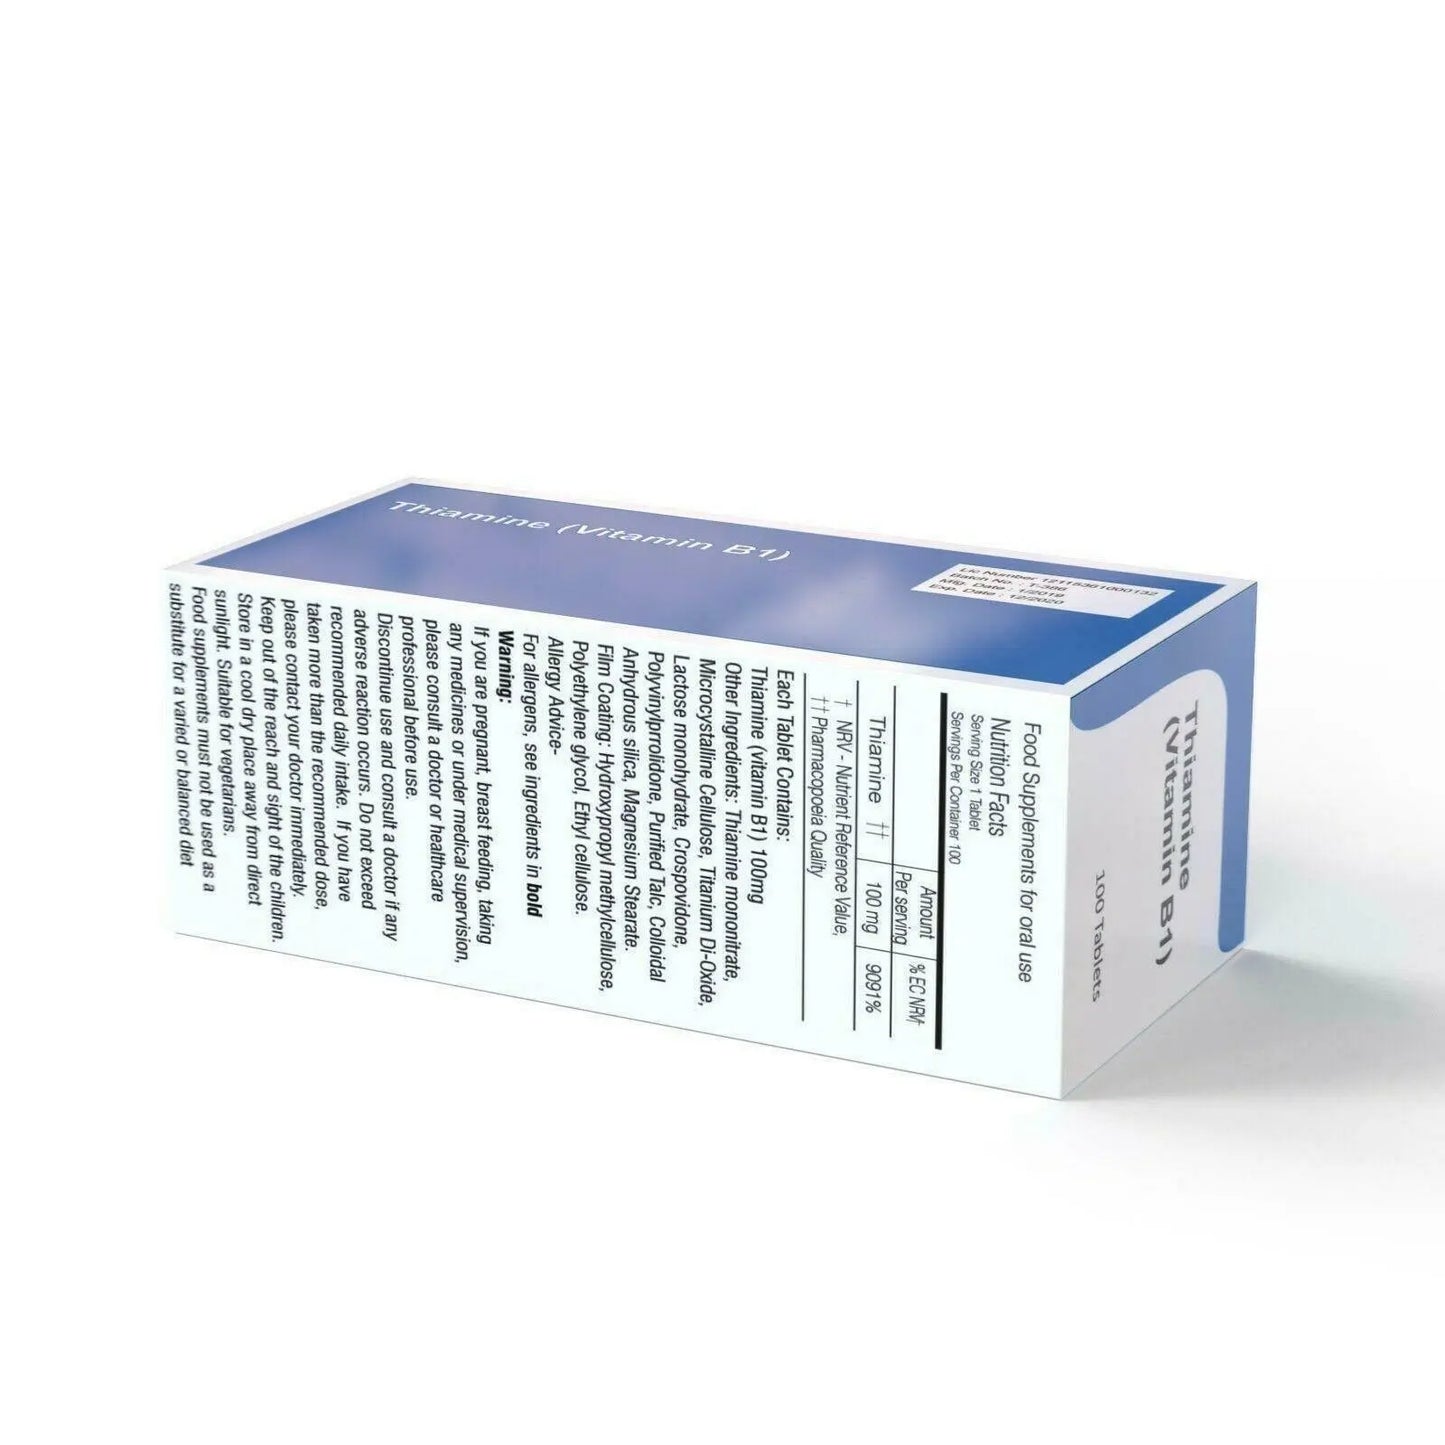 SIPCO Thiamine 100mg Vitamin B1 100 Tablets VEGETARIAN